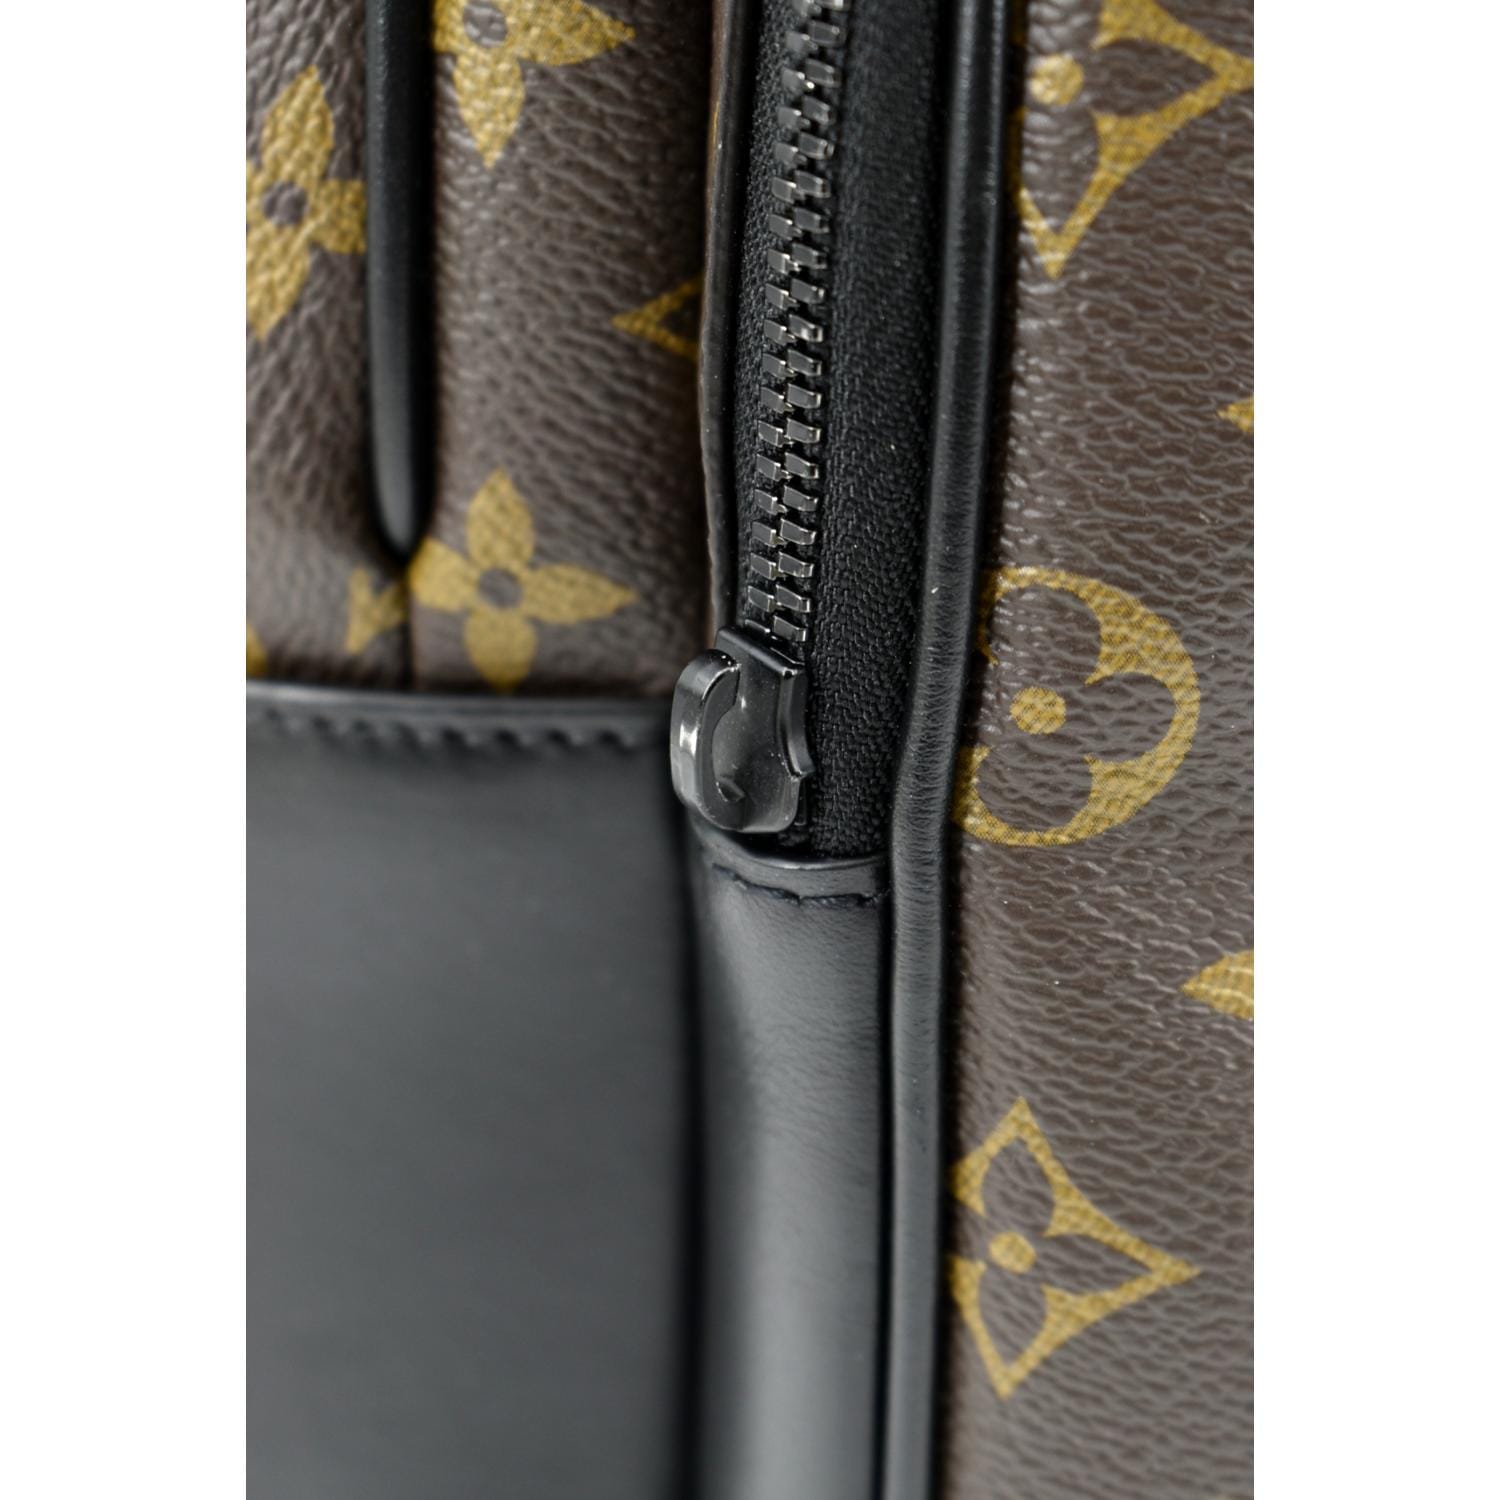 Louis Vuitton Dean Backpack brand new